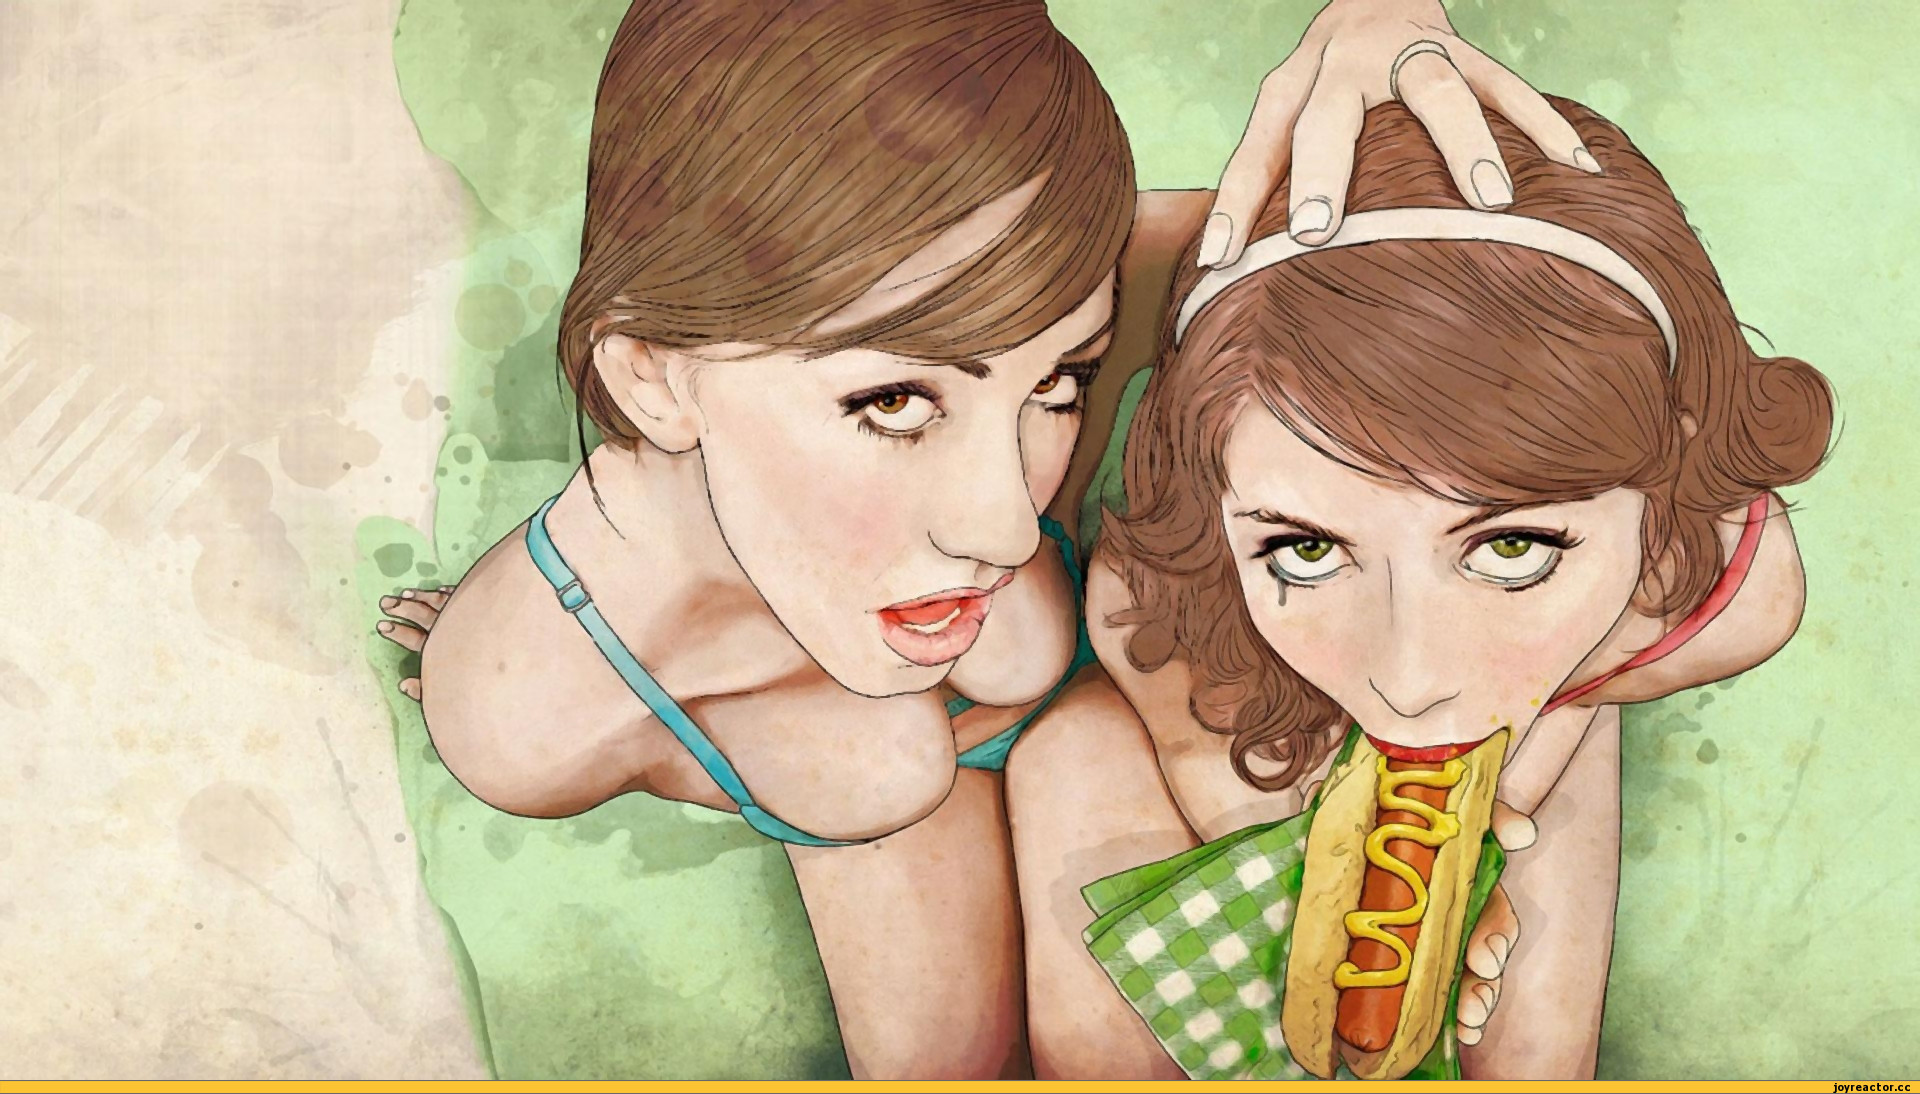 Wallpapers food hot dog girls on the desktop